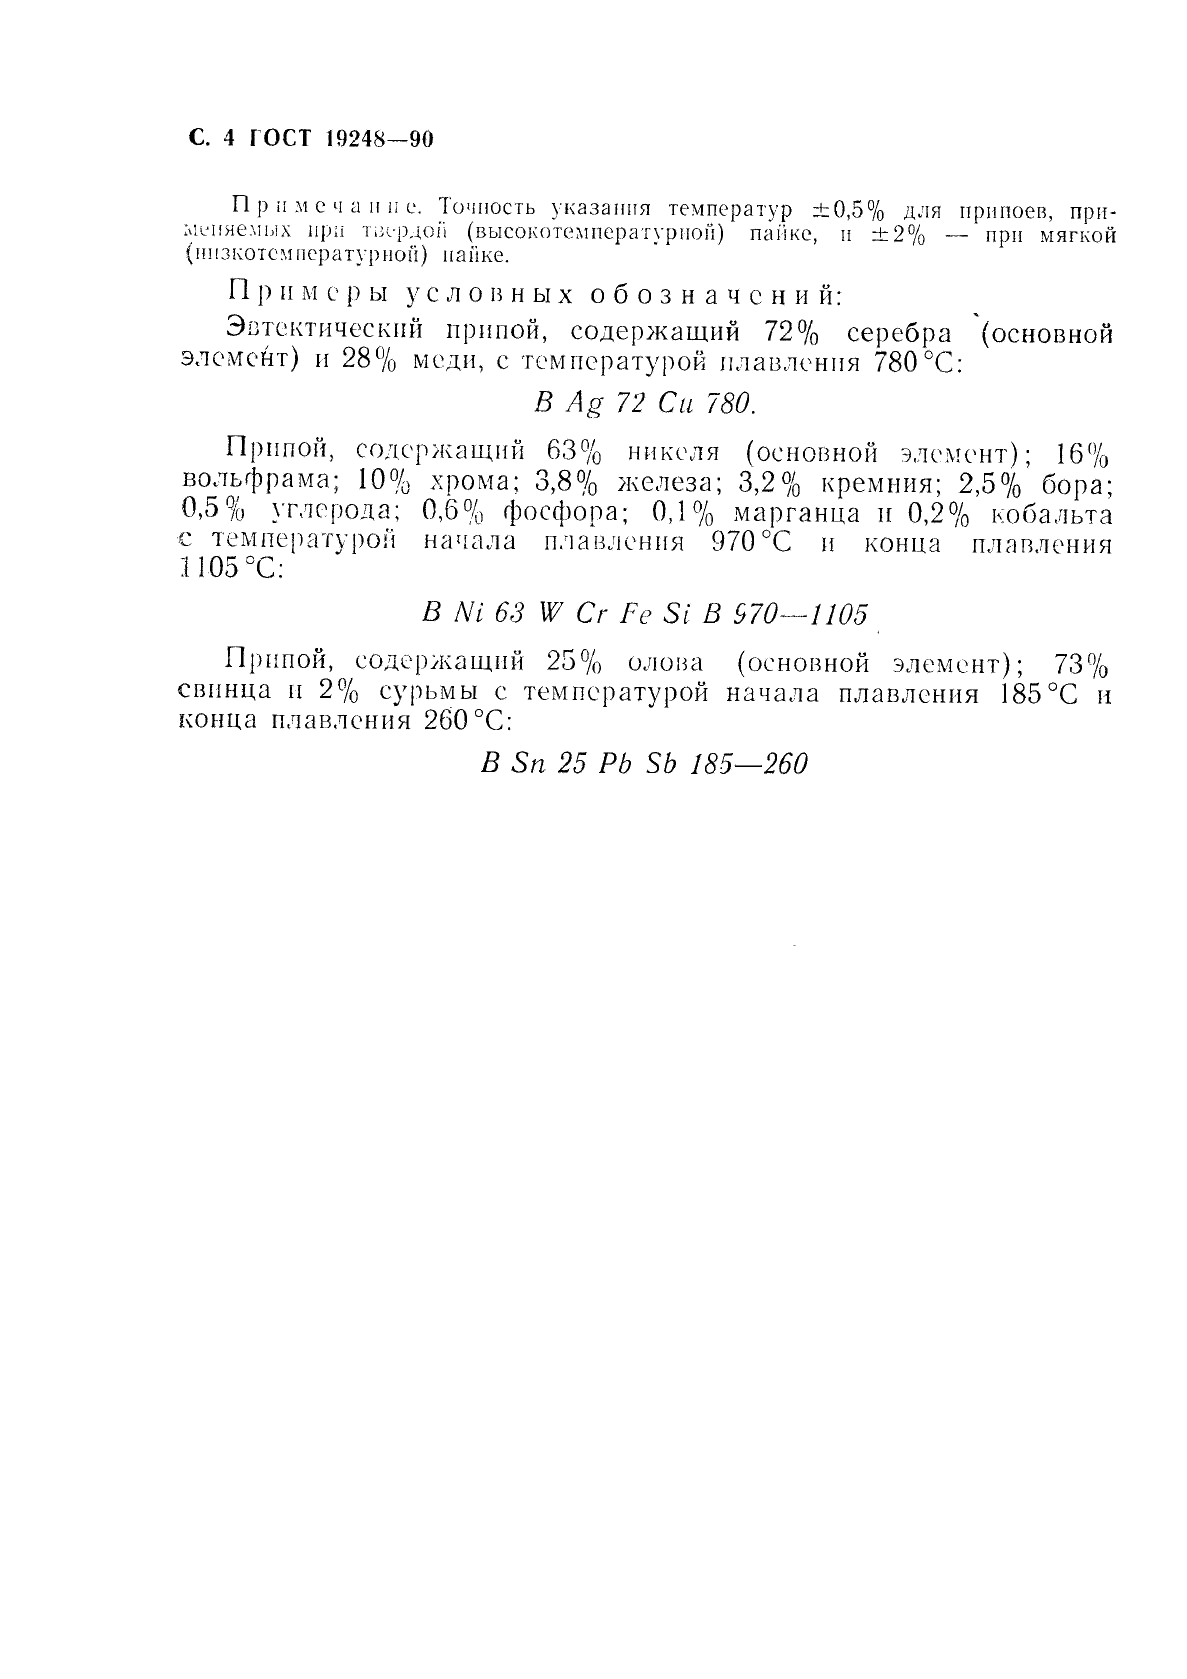 ГОСТ 19248-90 Припои. Классификация и обозначения (фото 5 из 7)